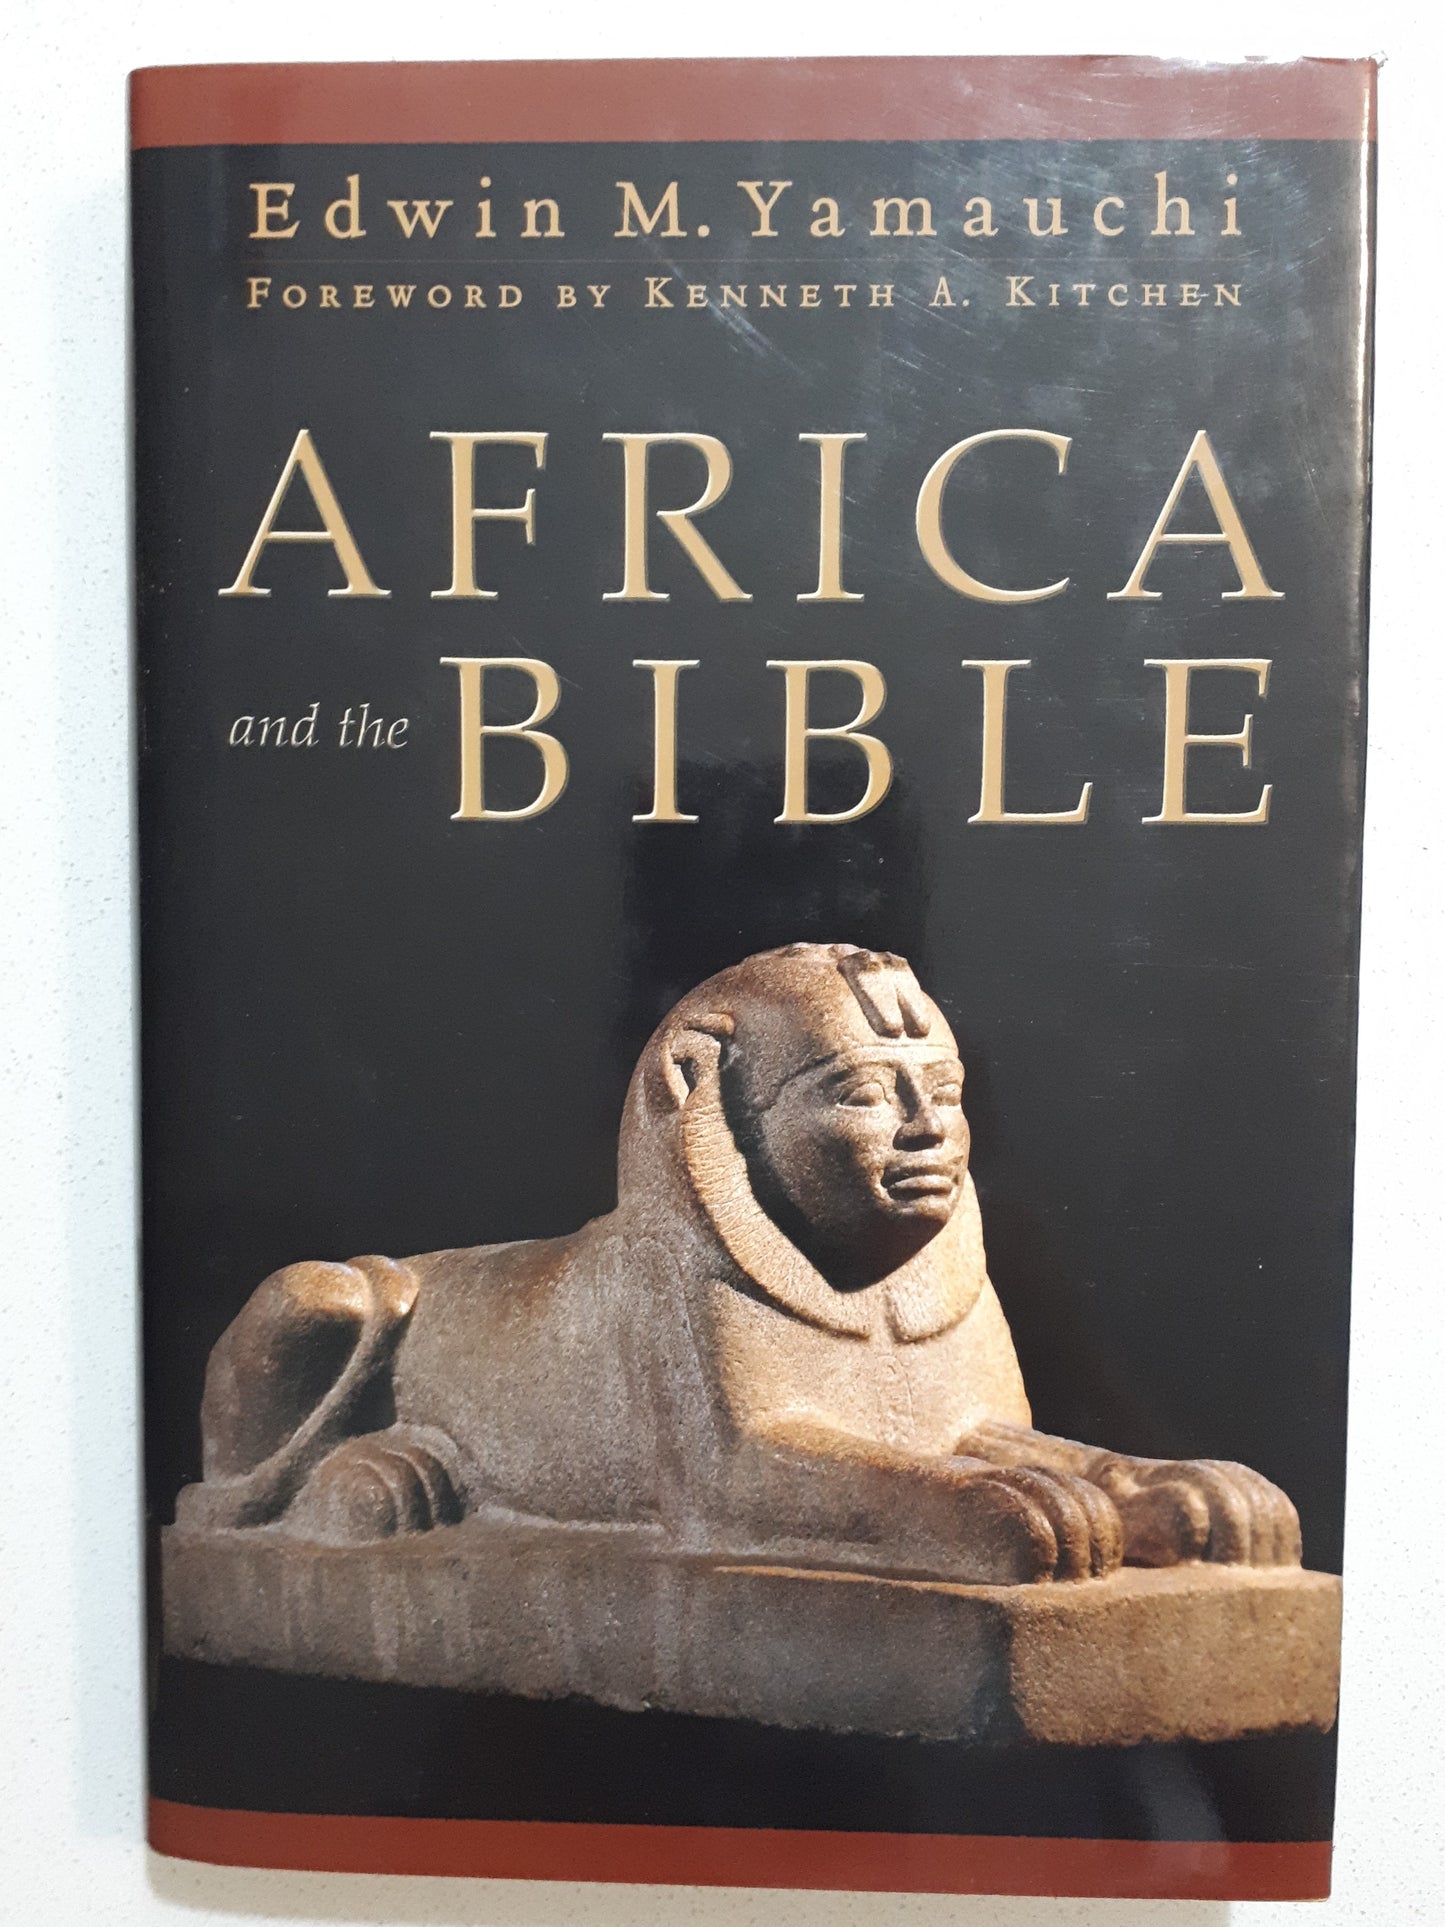 Africa and the Bible by Edwin M. Yamauchi